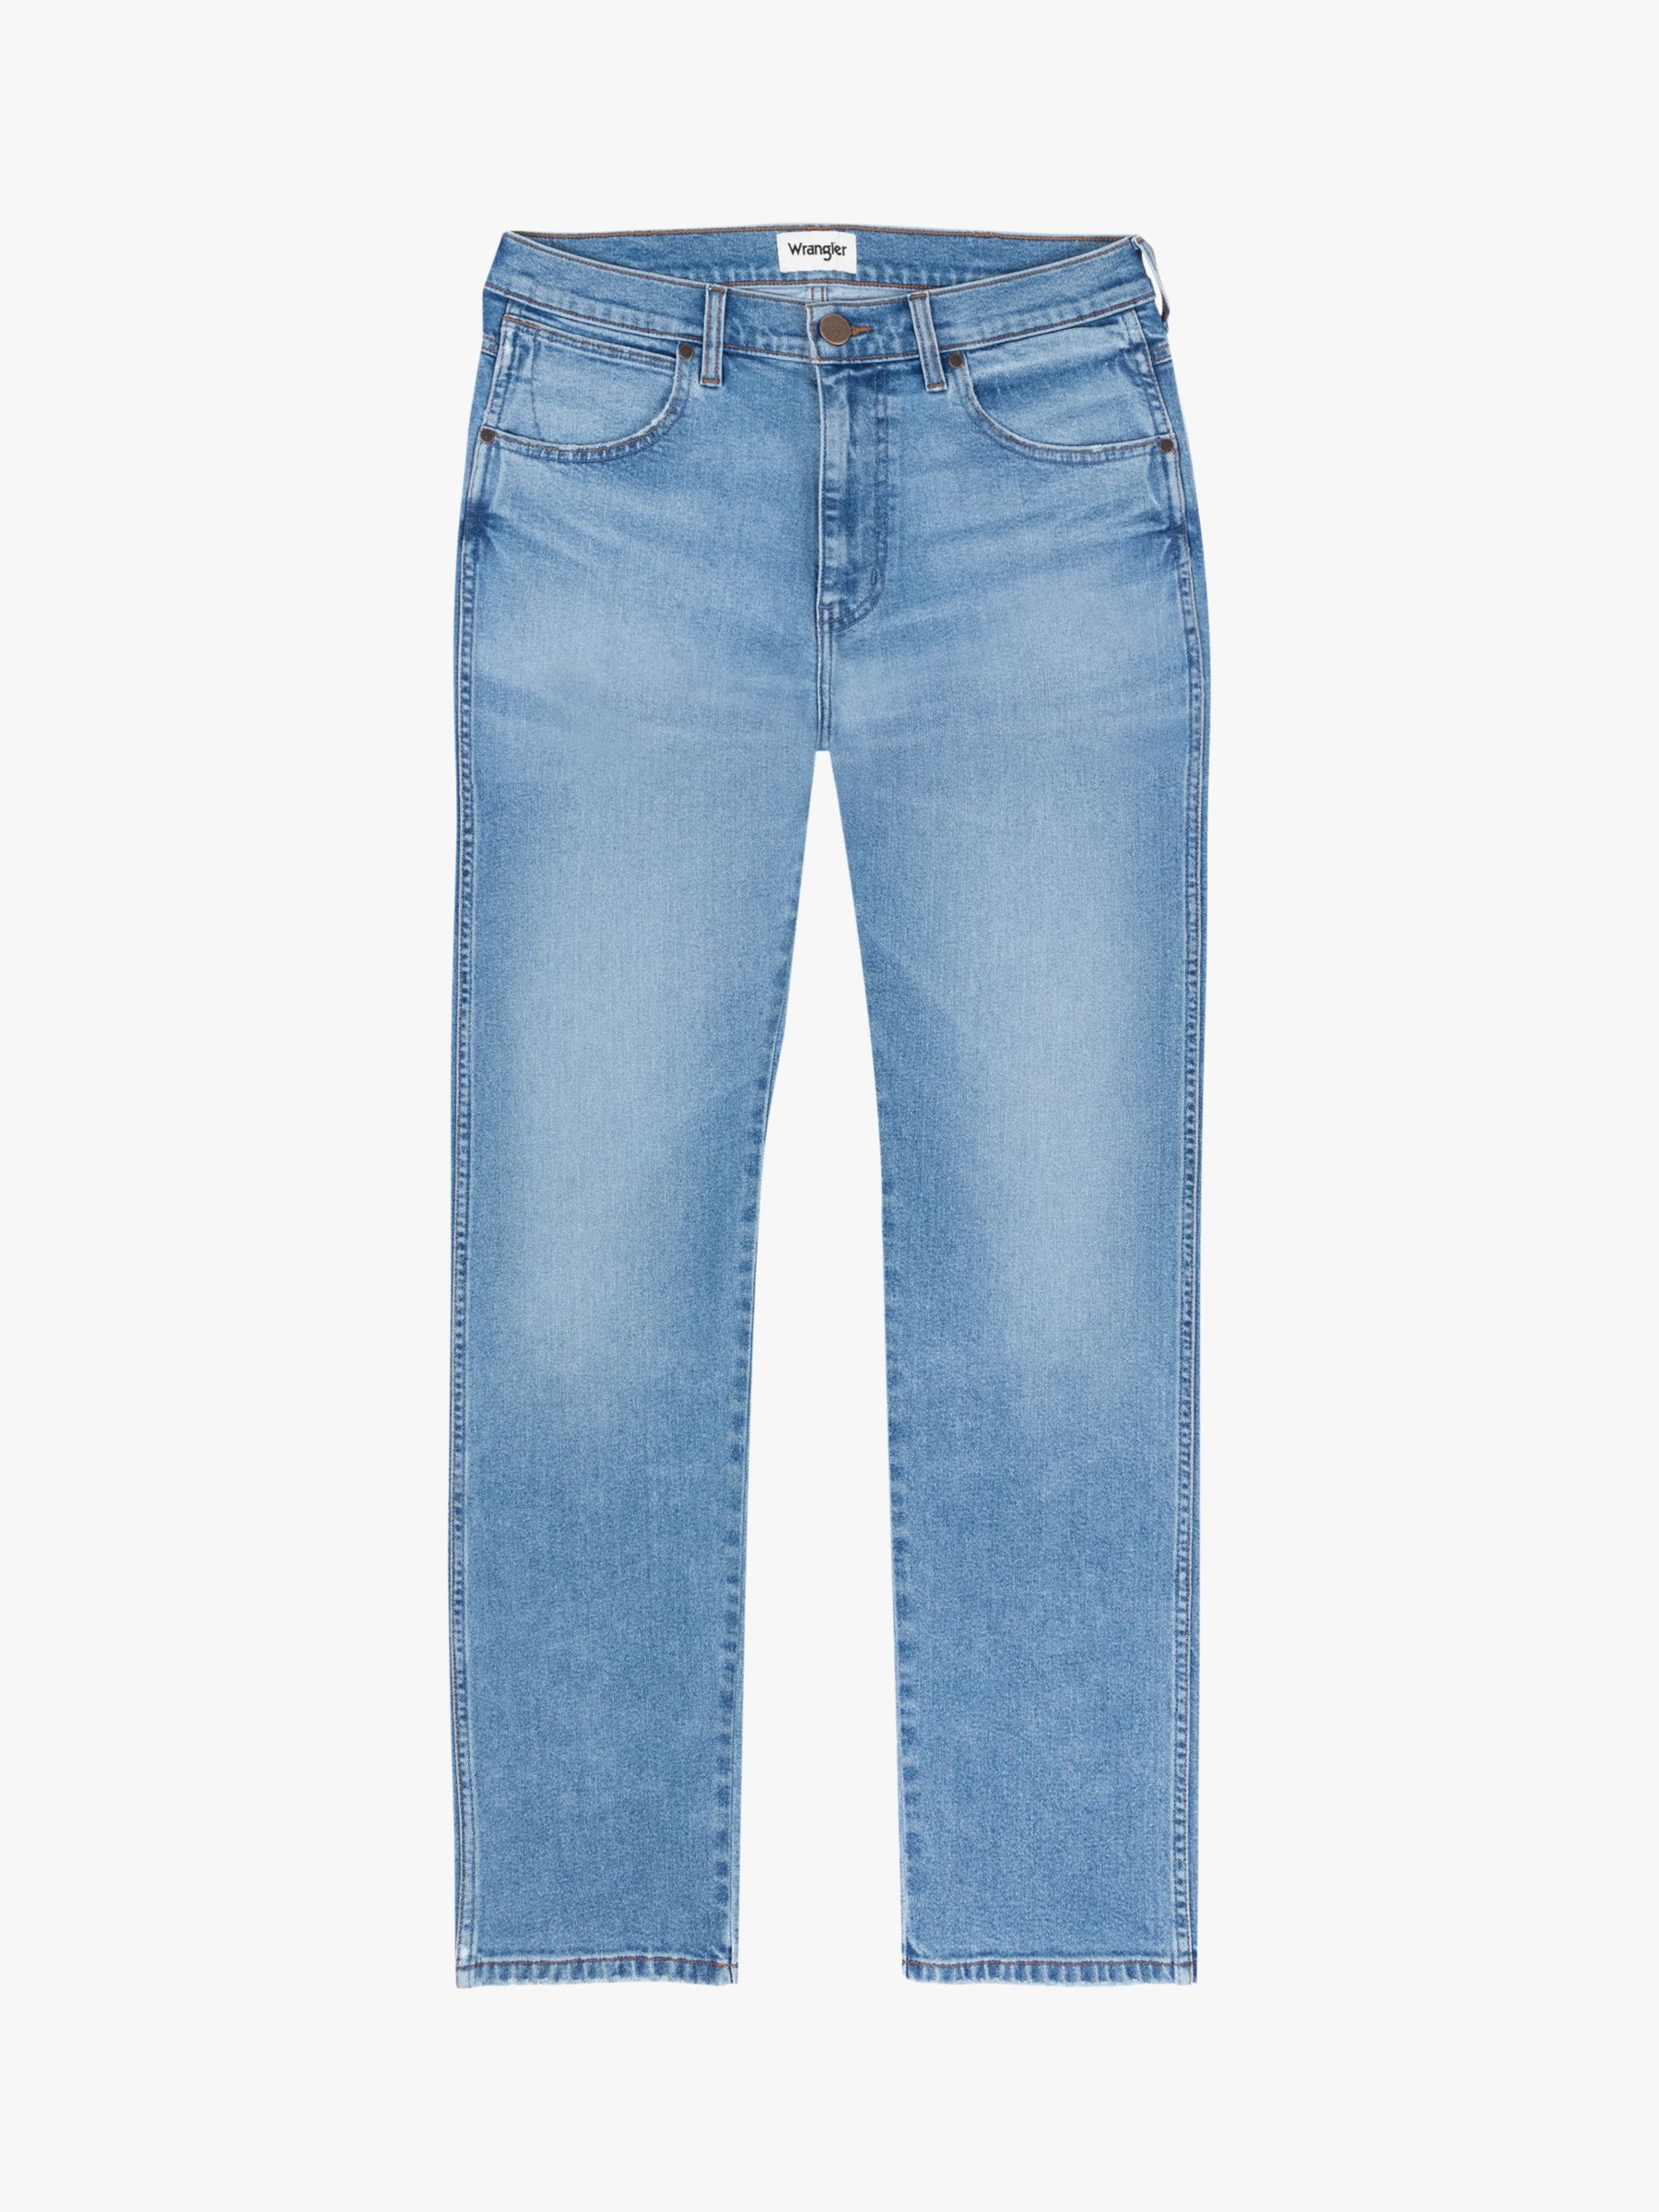 Wrangler Frontier Regular Fit Jeans, Cool Twist at John Lewis & Partners